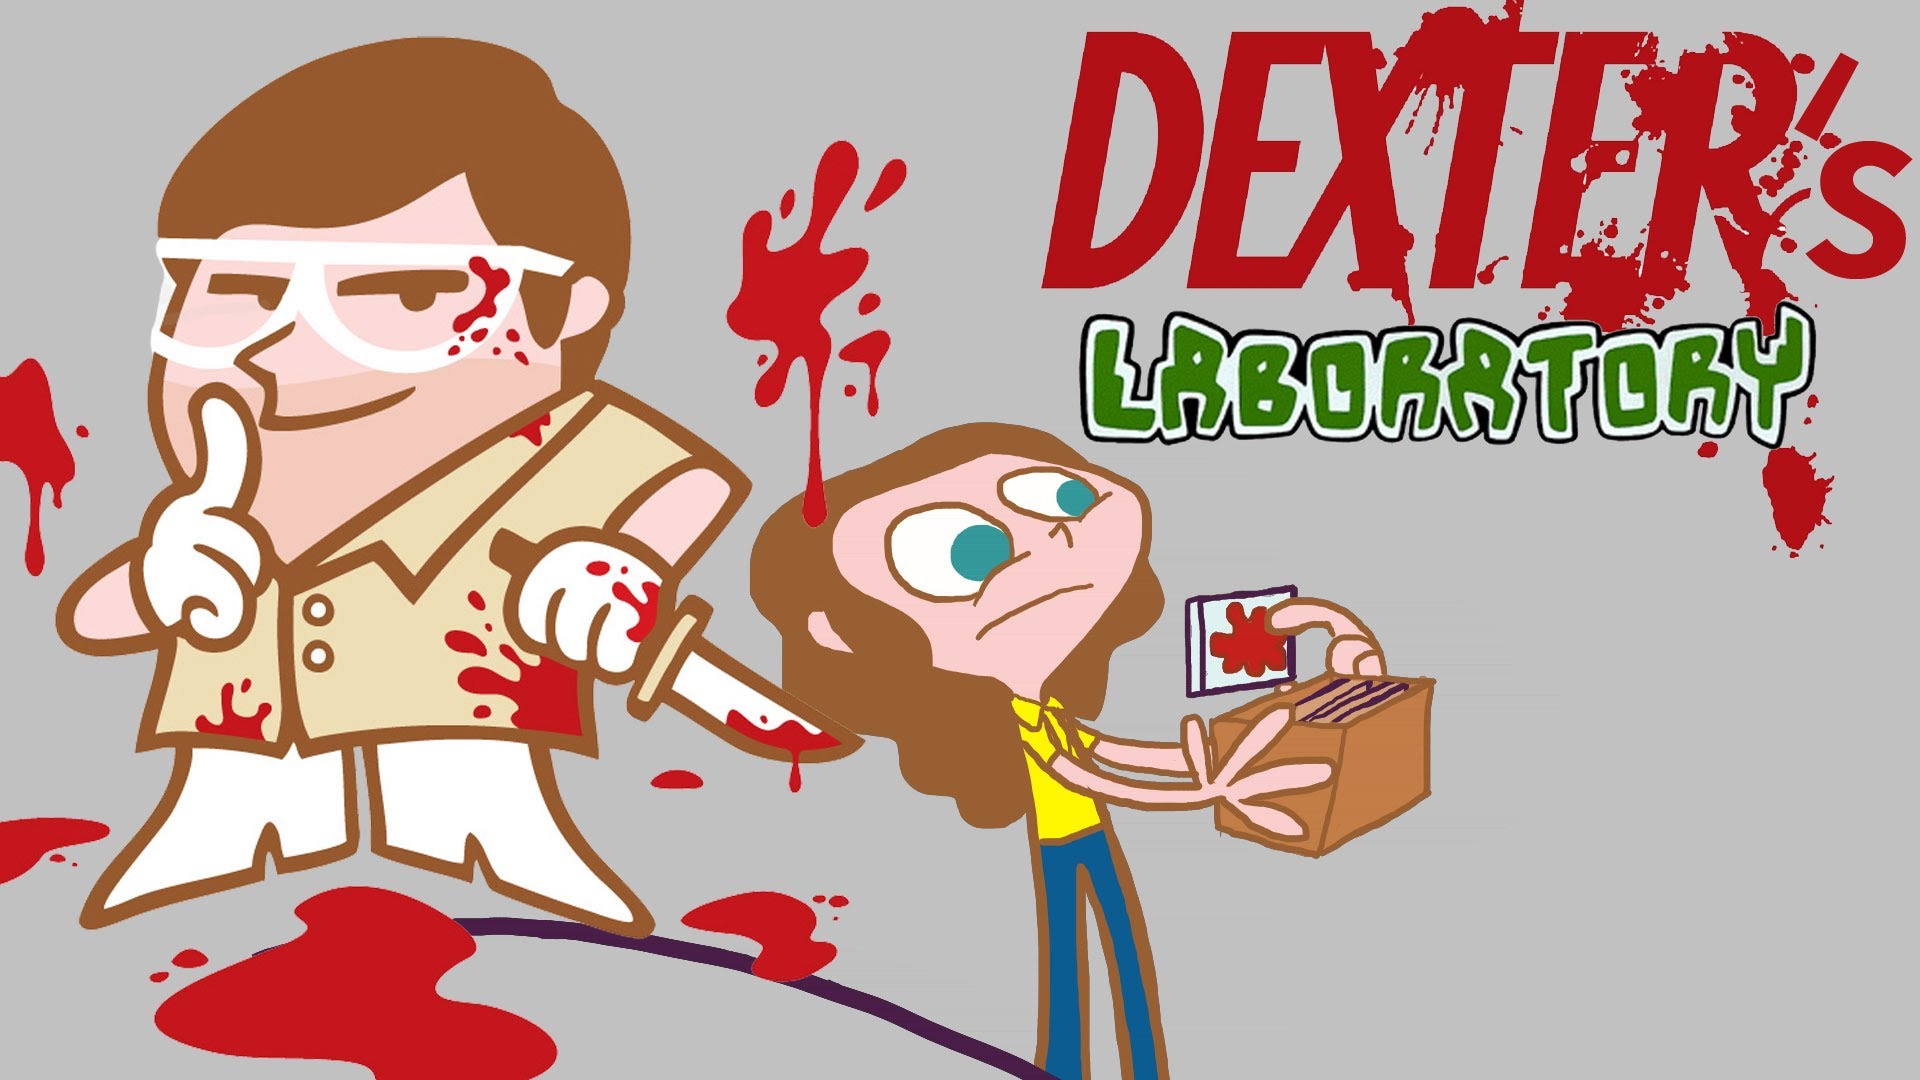 Dexter wallpaper for desktop (8)